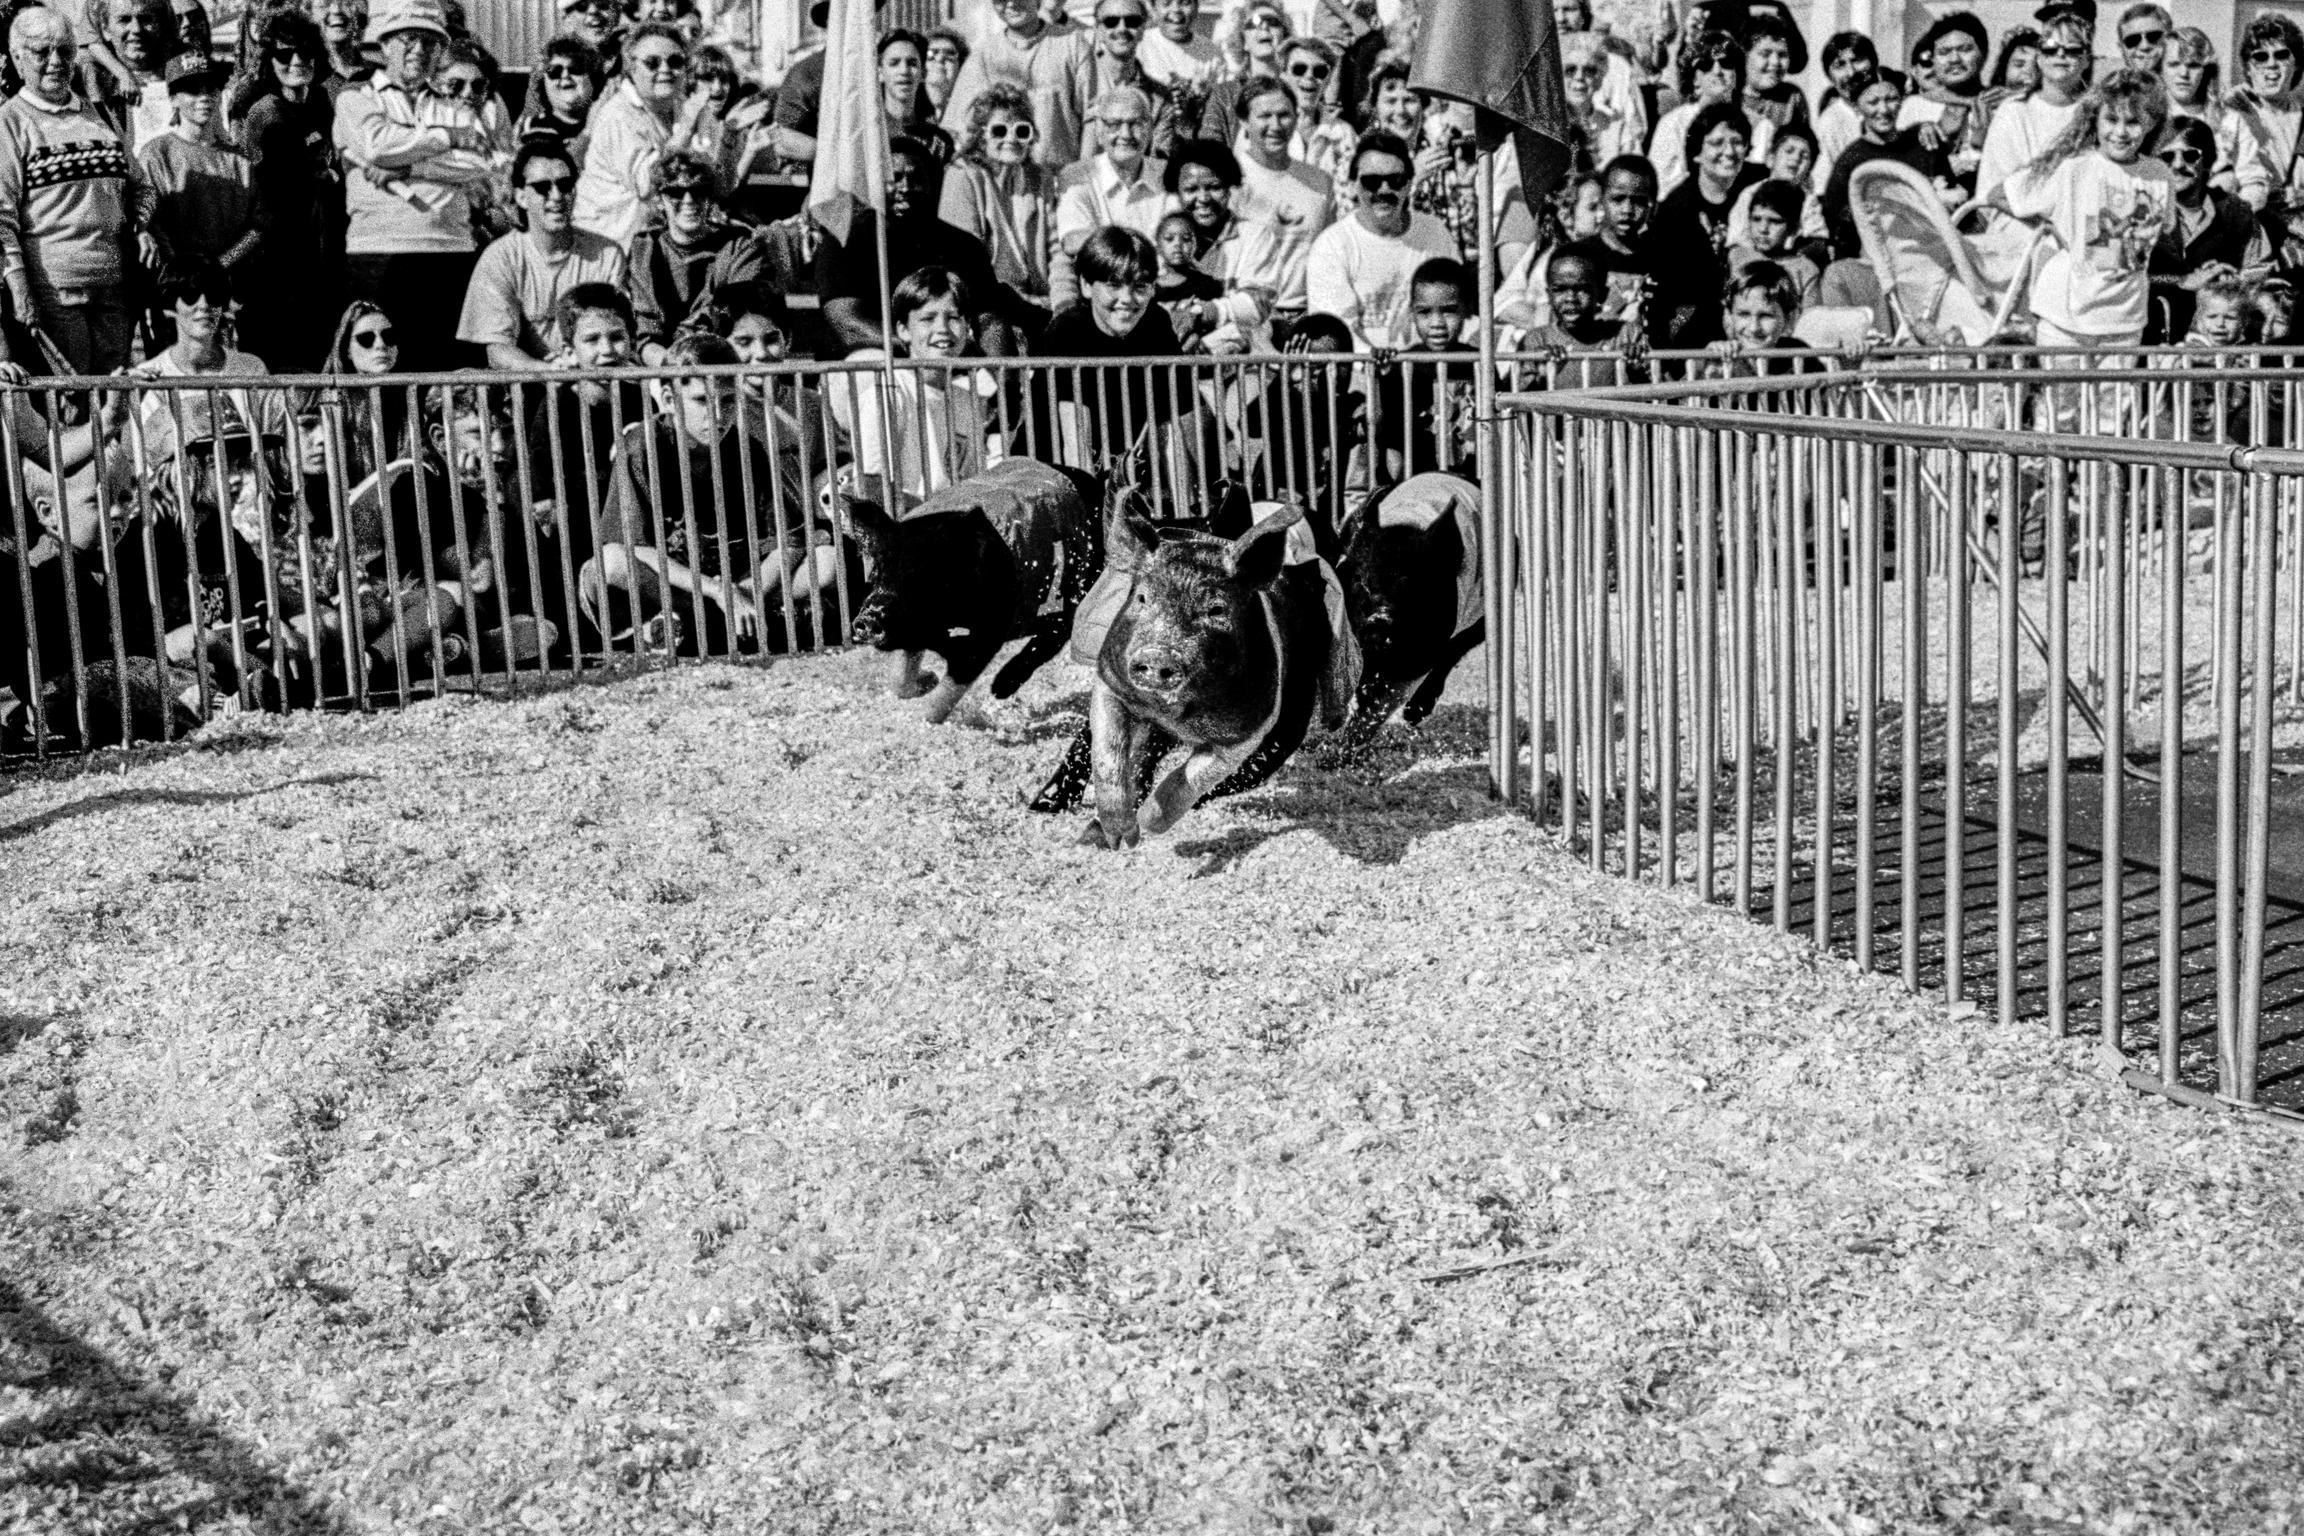 County Fair. Pig racing. Phoenix, Arizona USA